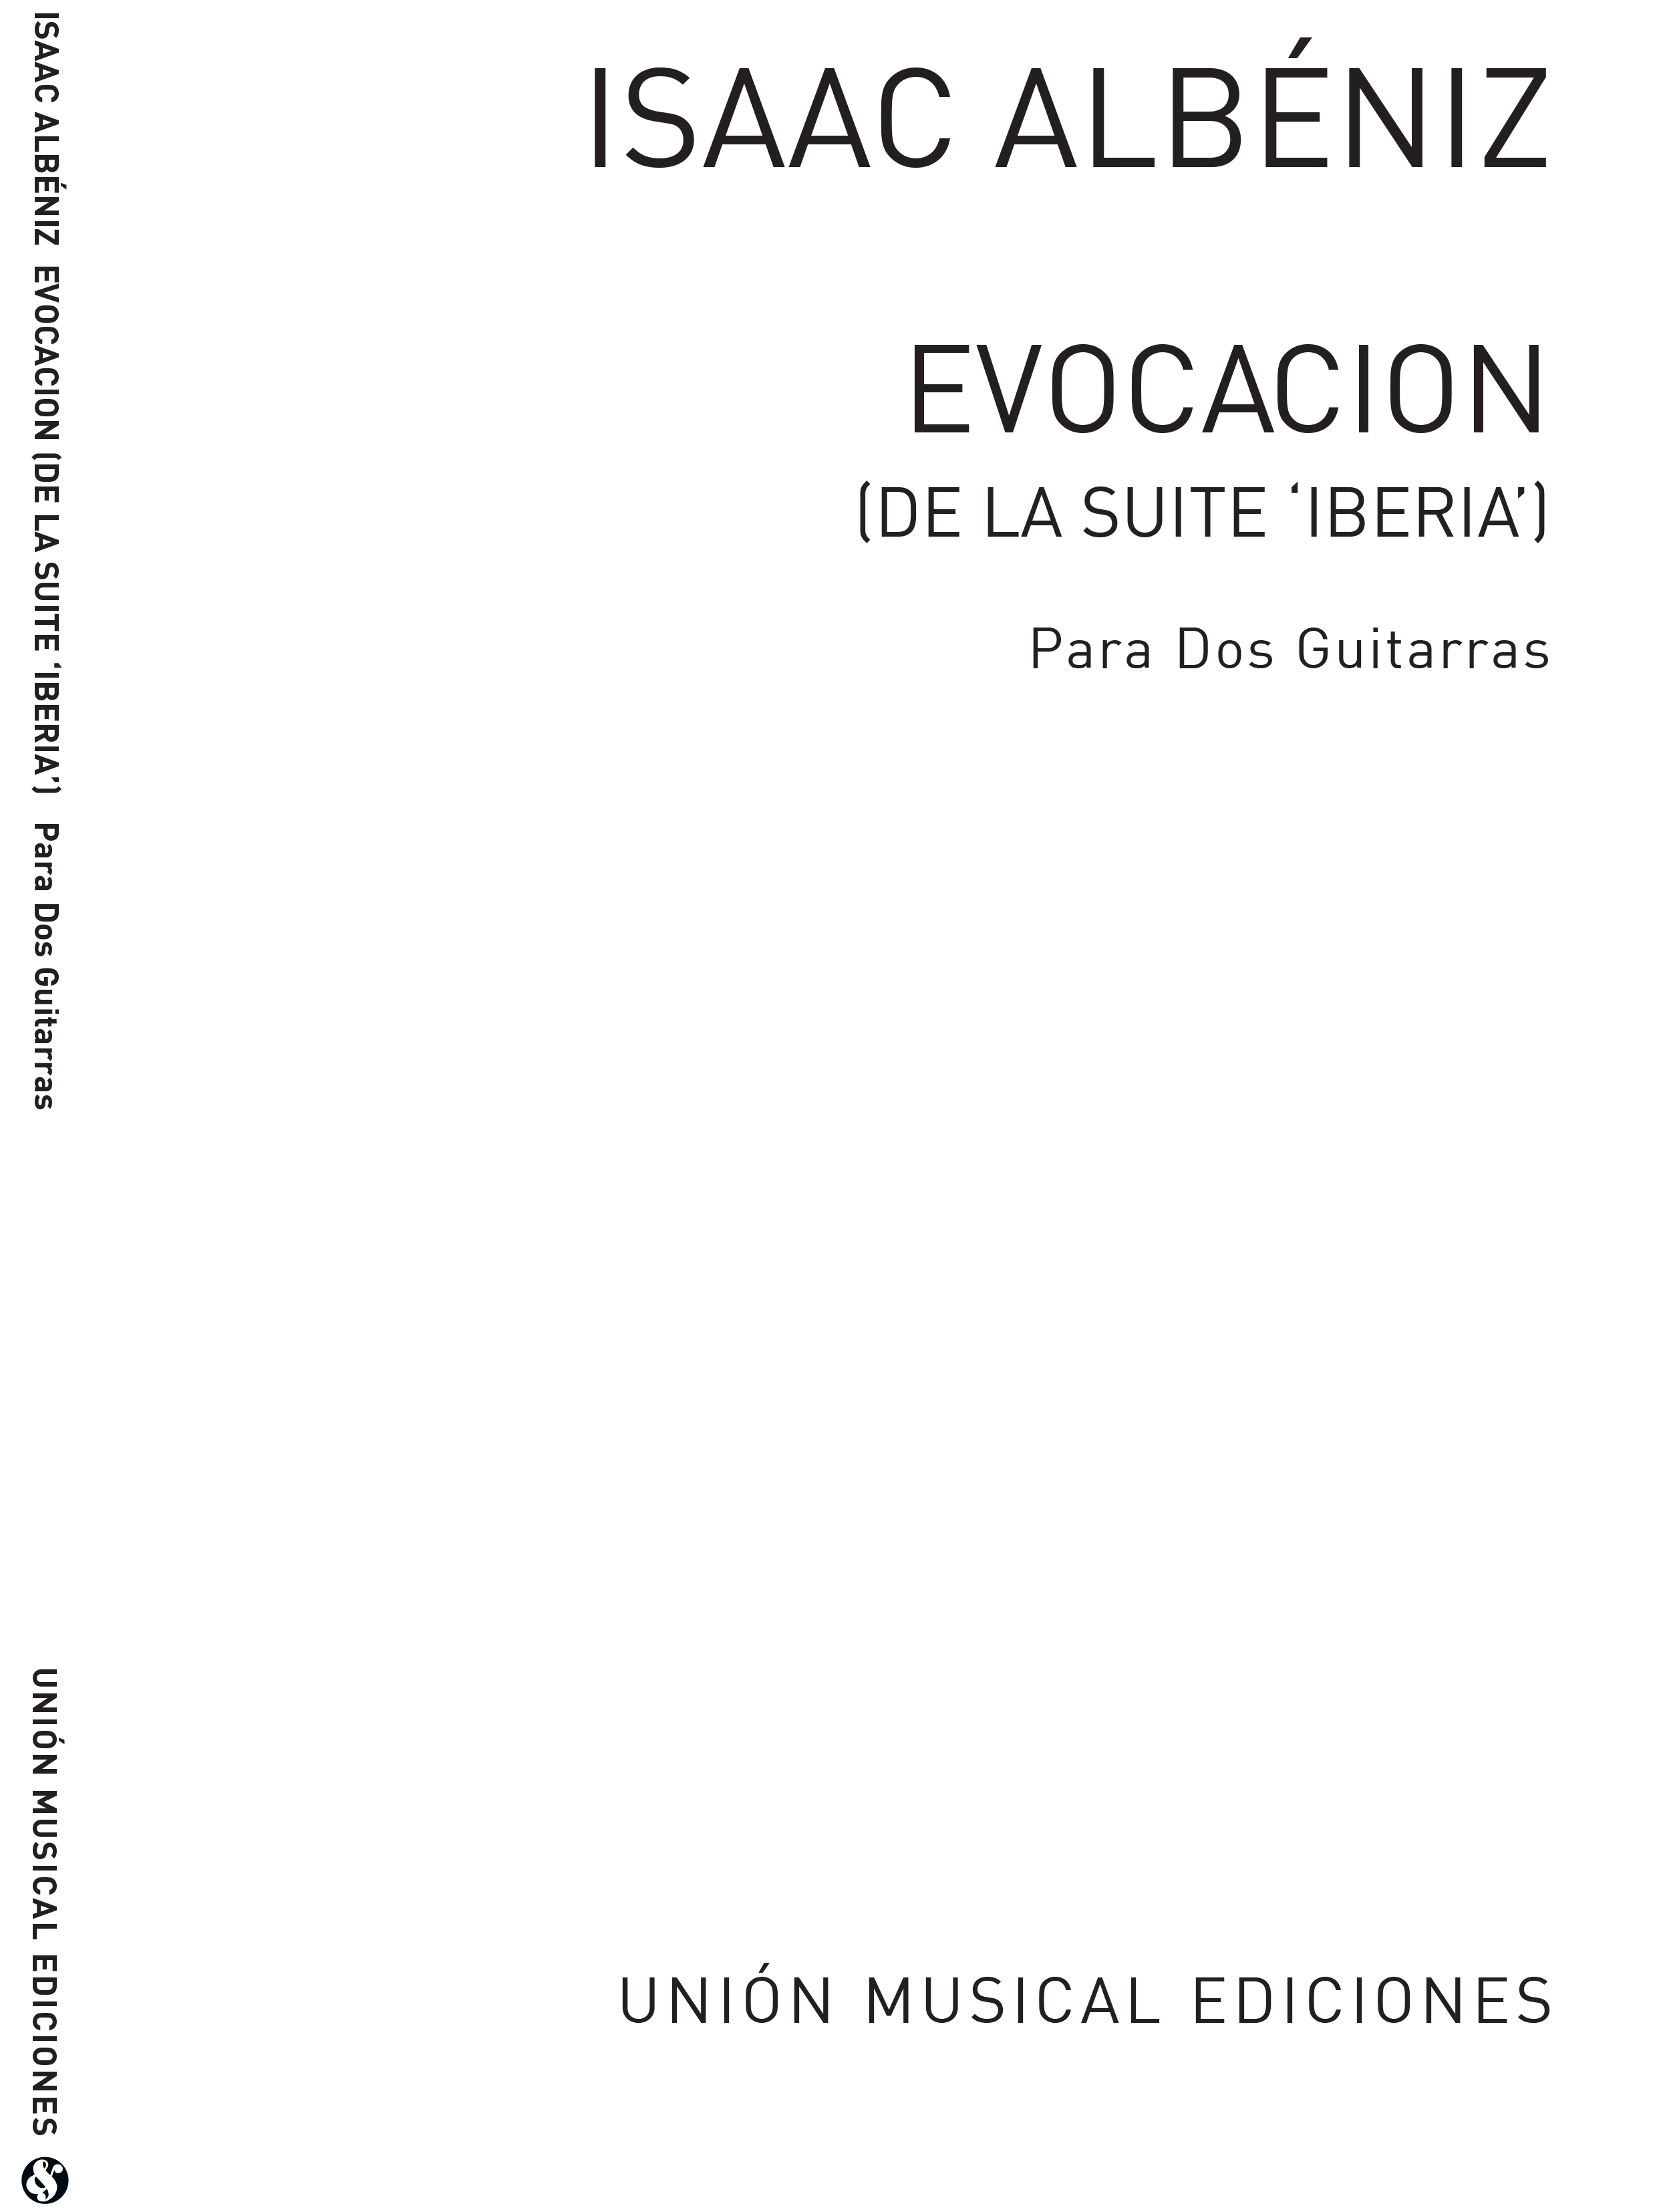 Isaac Albéniz: Albeniz Evocacion (llobet) 2 Guitars: Guitar: Instrumental Album